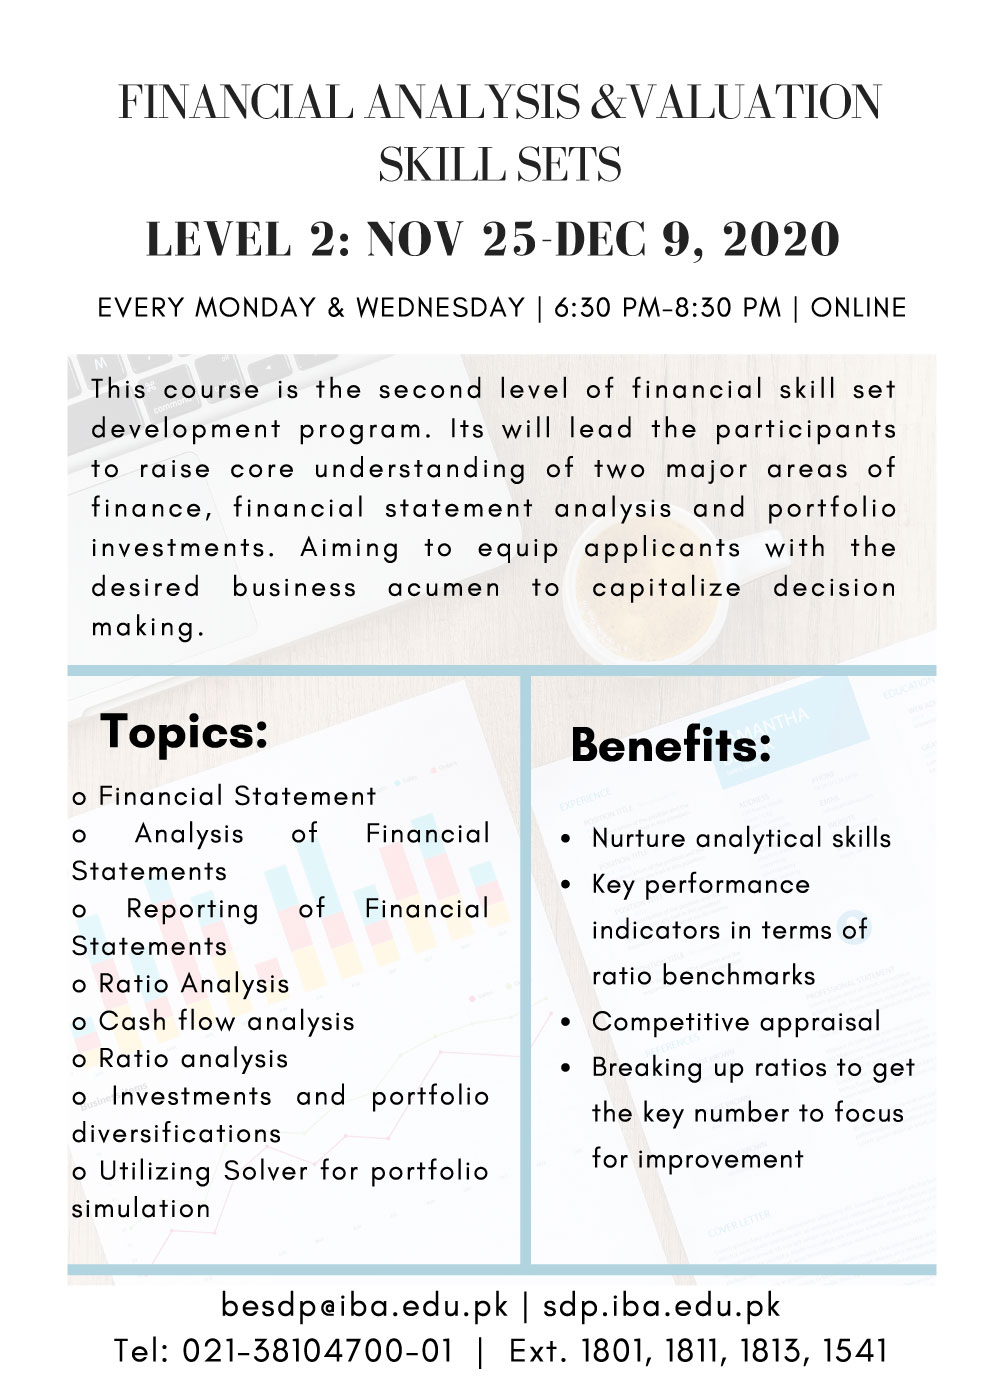 Financial analysis &valuation skill sets